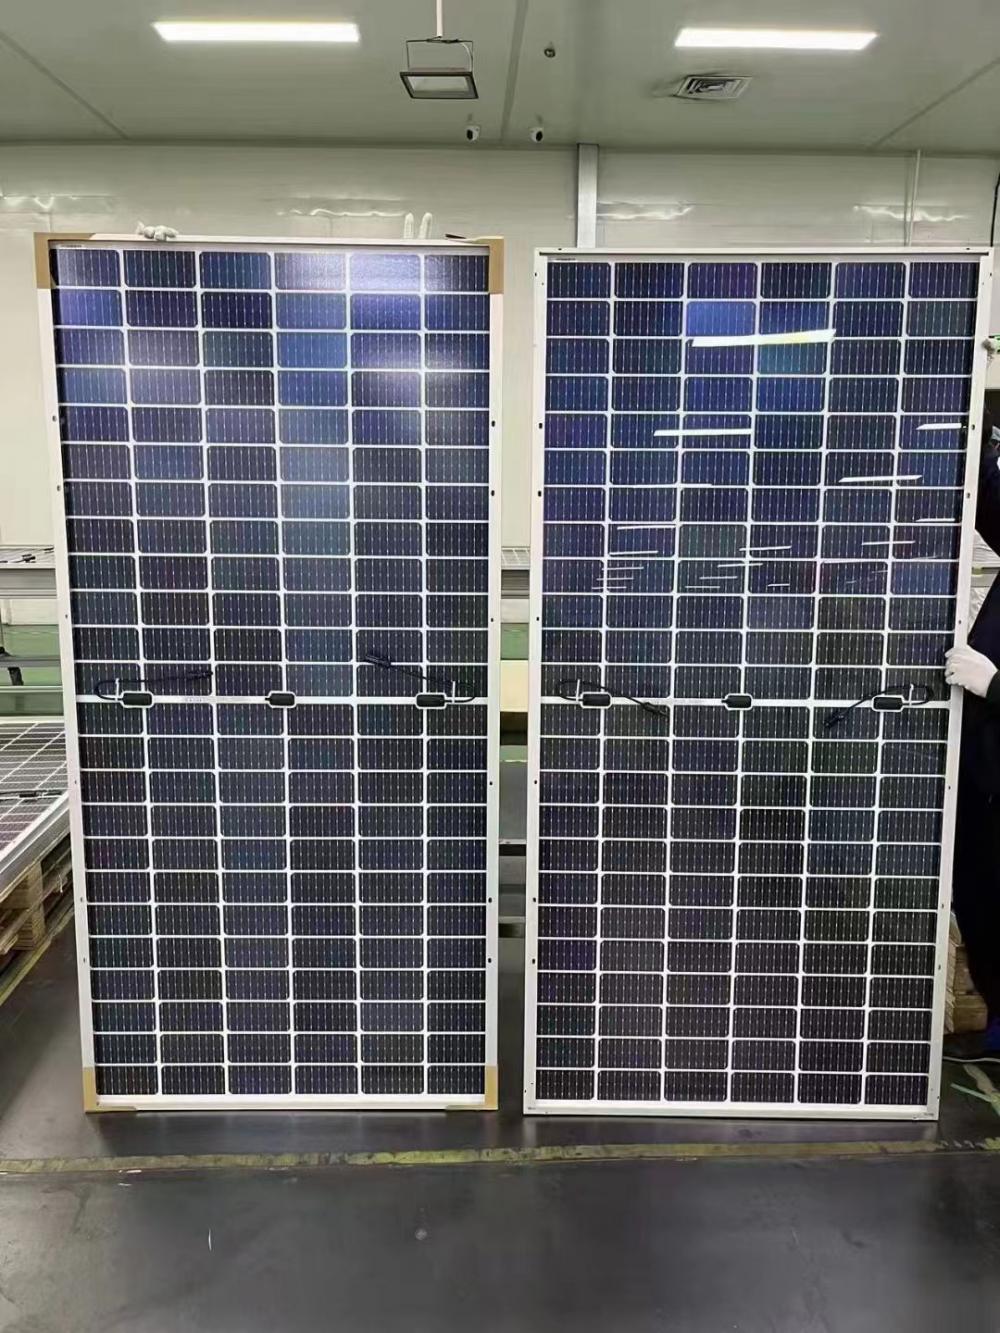 Sunket nuevo producto 166 mm 144 Cells HJT Solar Module